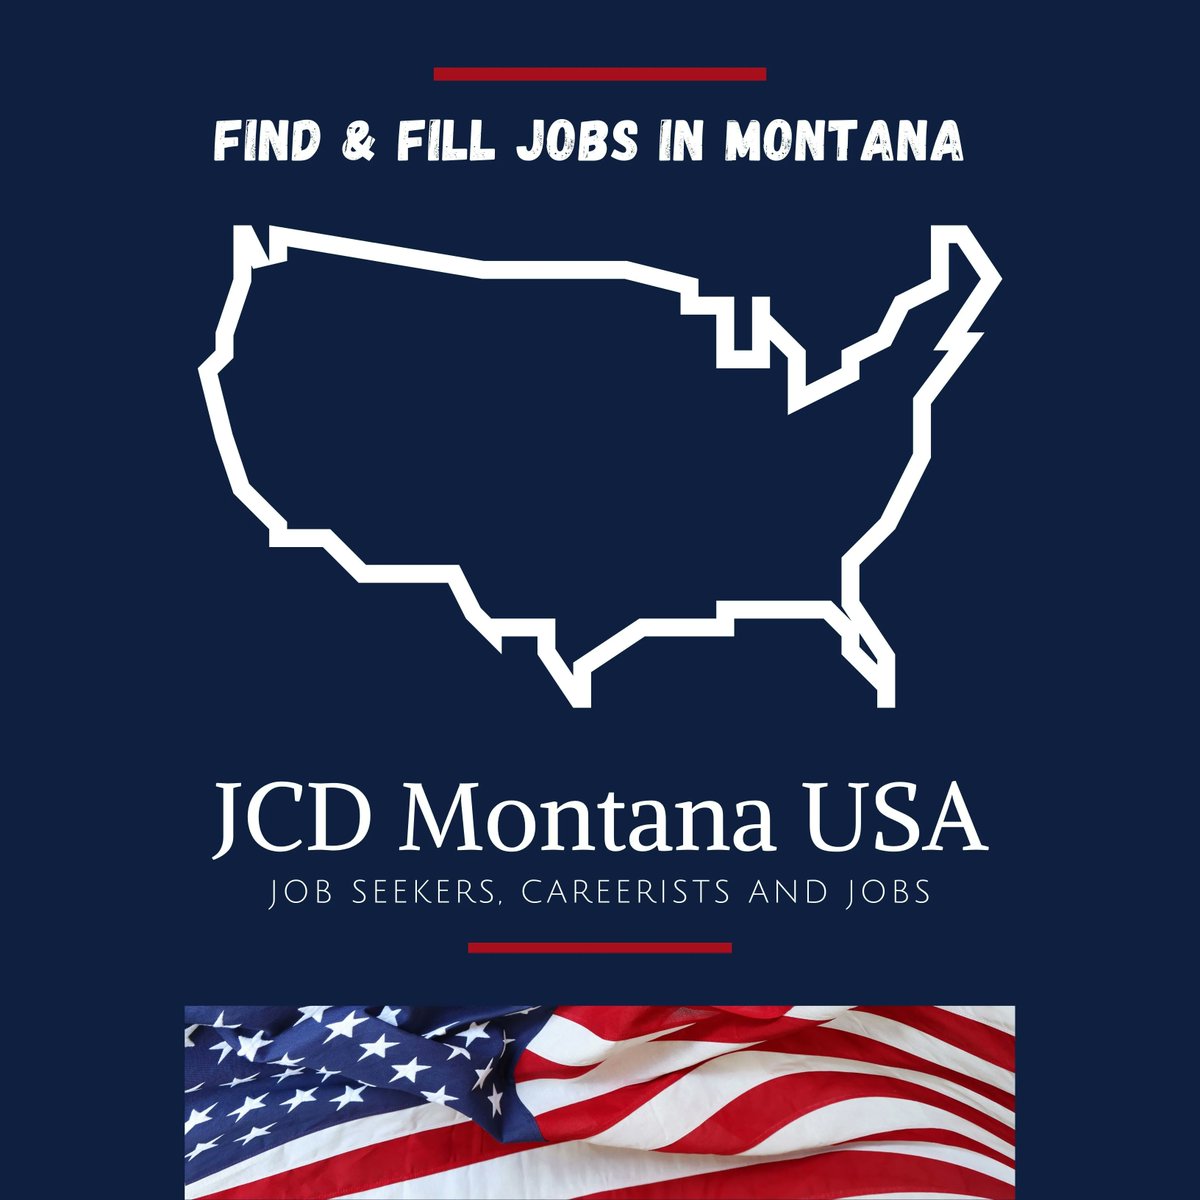 Looking for #jobs or #hiring #Talent in #Montana? GO HERE buff.ly/3BaBZyo

#montanjobs #missoula #missoulamt #billingsmt #bozeman #polsonmt #bakermt #bigskymt #buttemt  #dillonmt #glasgowmt #livingstonmt #stevensvillemt #whitefishmontana #belgrademt #LinkedIn #usajobs